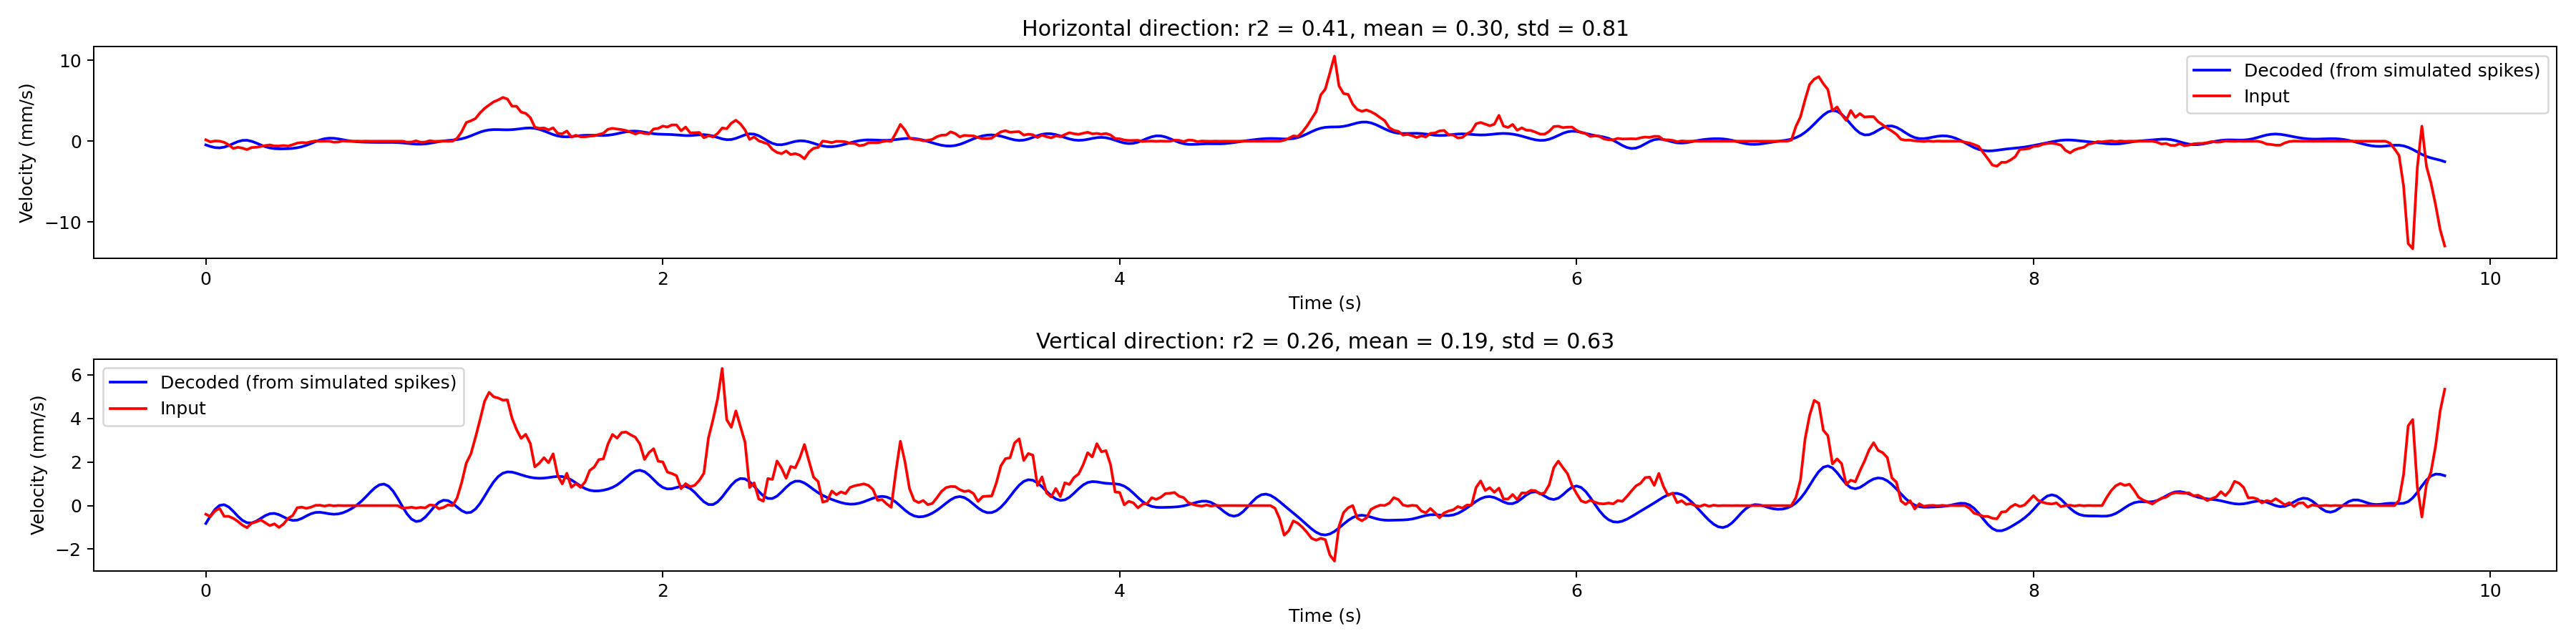 Horizontal direction: r2 = 0.41, mean = 0.30, std = 0.81, Vertical direction: r2 = 0.26, mean = 0.19, std = 0.63